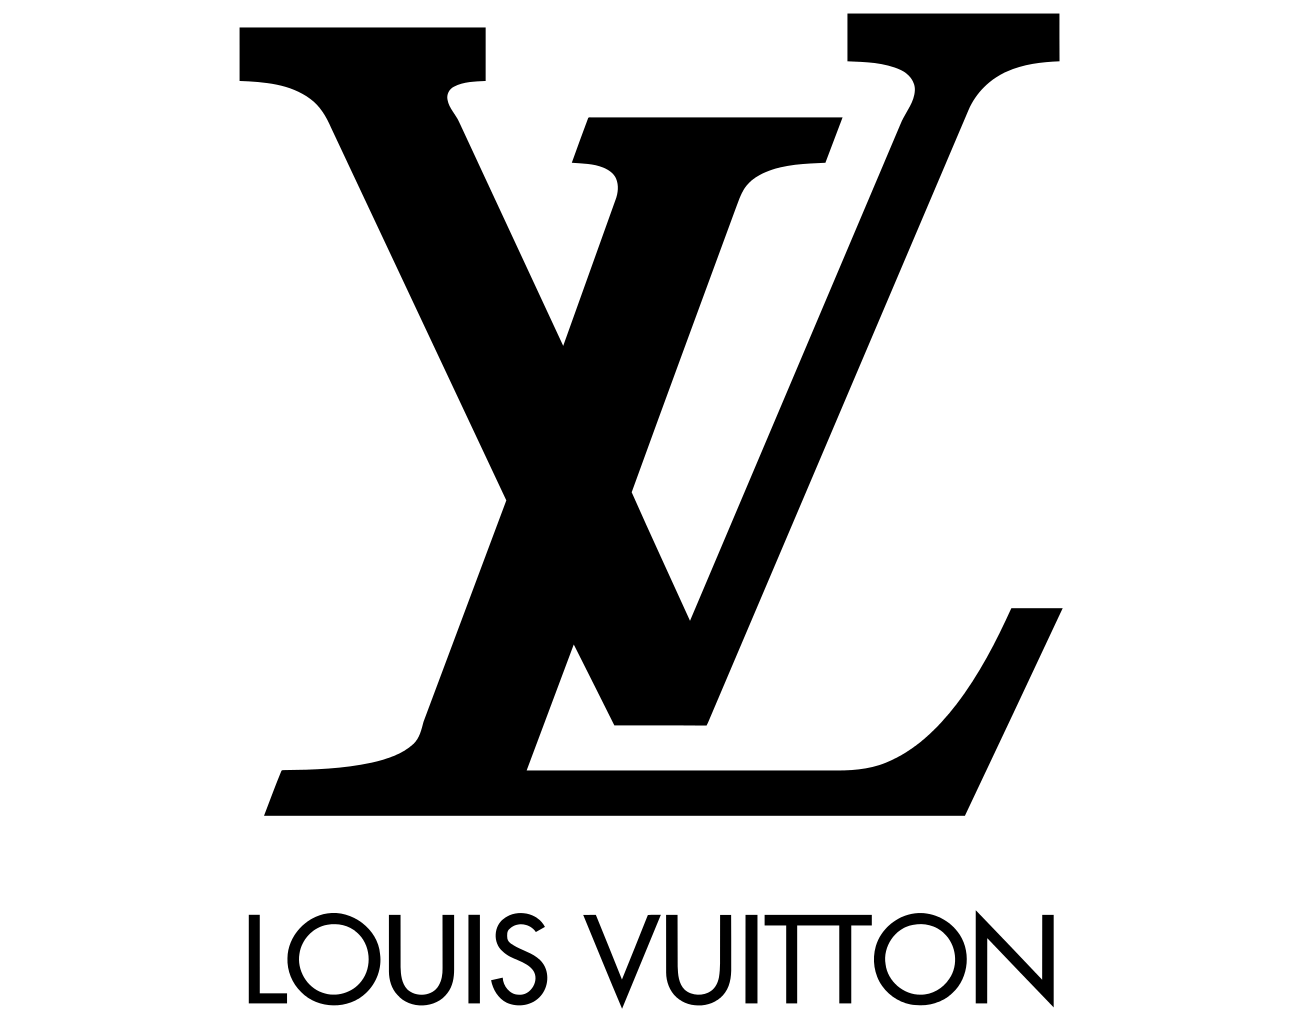 Loui Supreme Logo - Louis Vuitton Logo, Louis Vuitton Symbol Meaning, History and Evolution